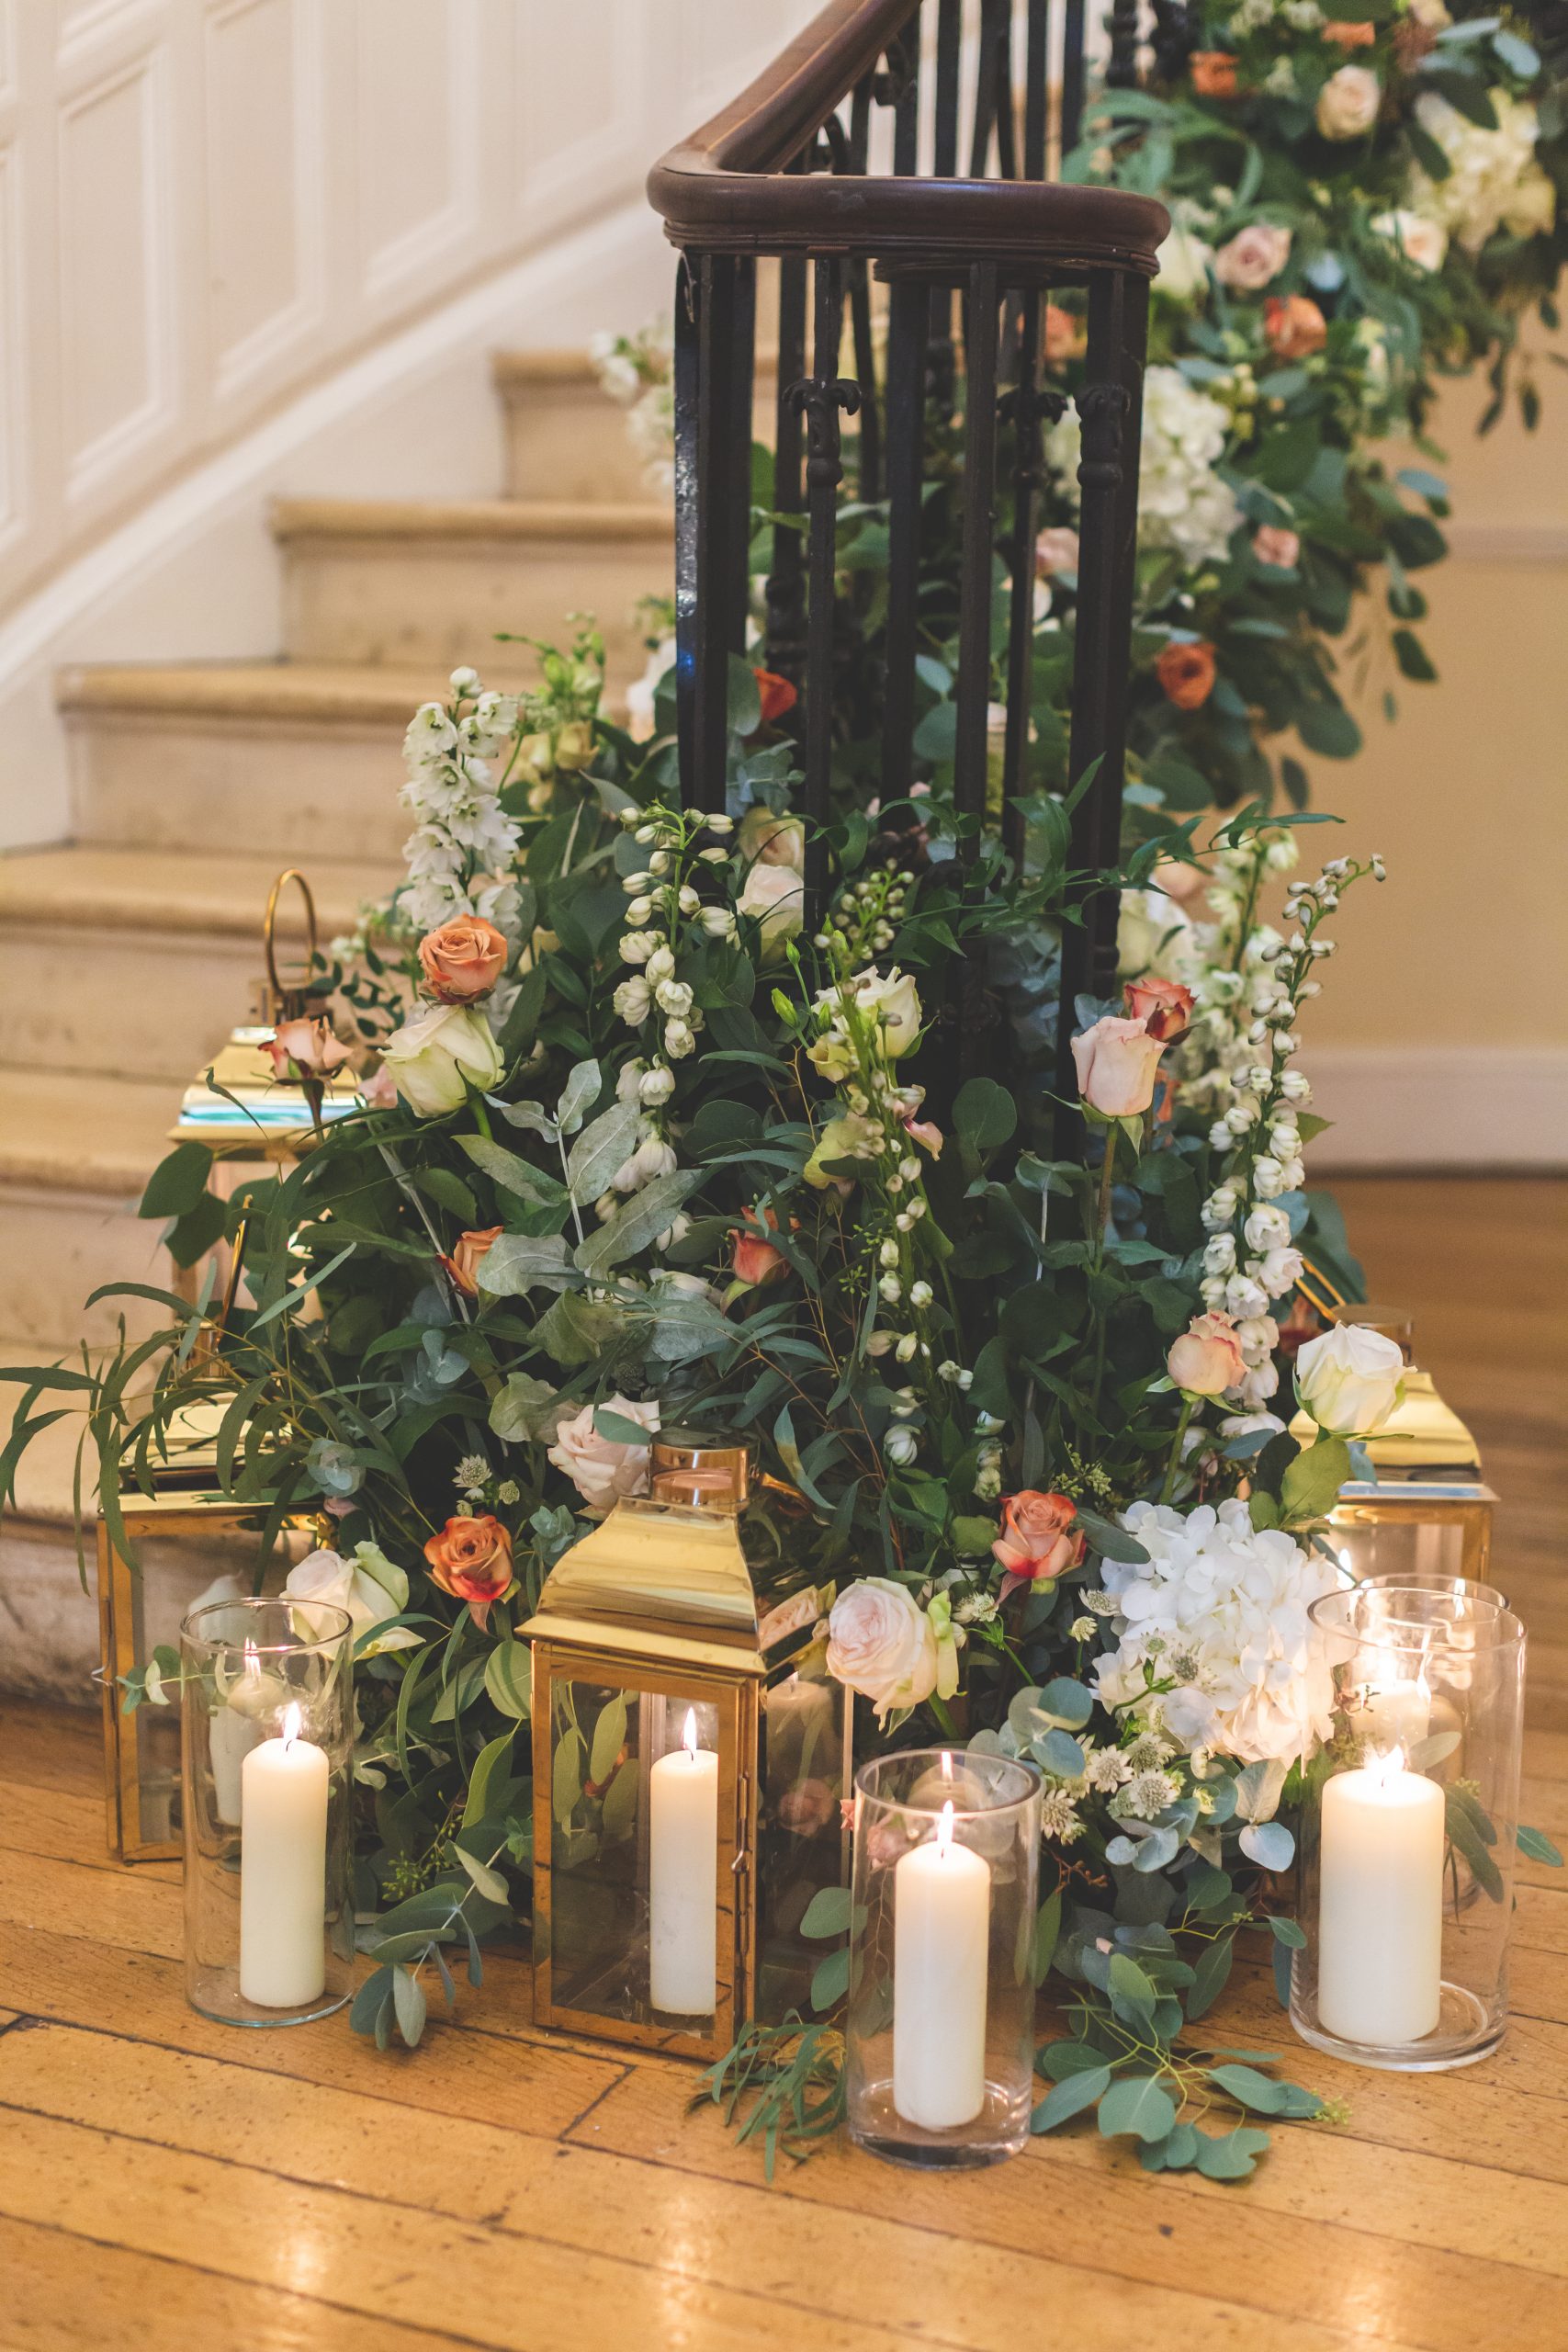 Daisy lane Floral Design wedding staircase floral garland